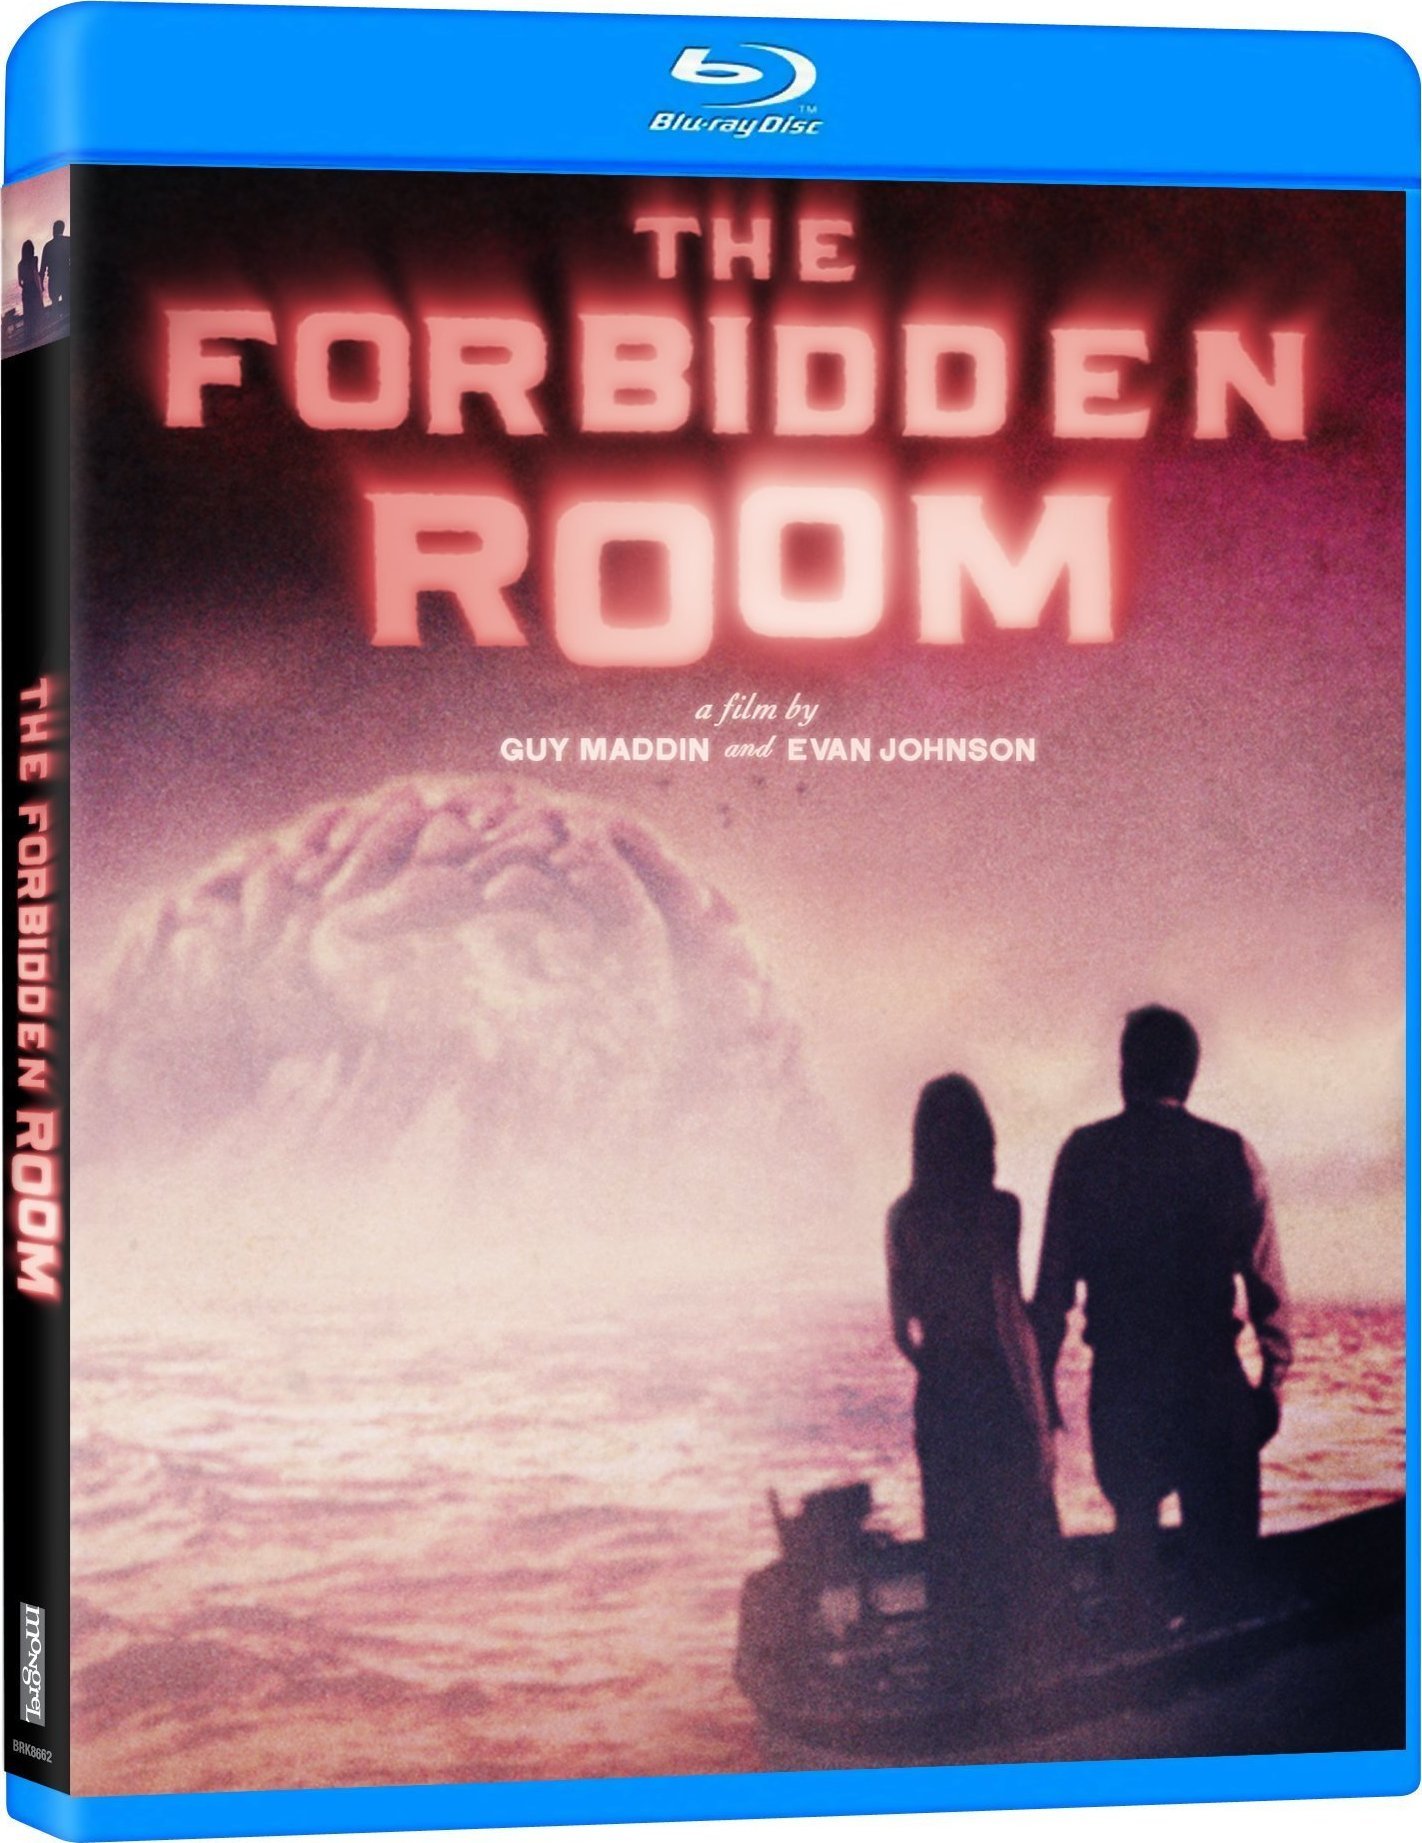 The forbidden room download torrent settaggi utorrent mac downloads